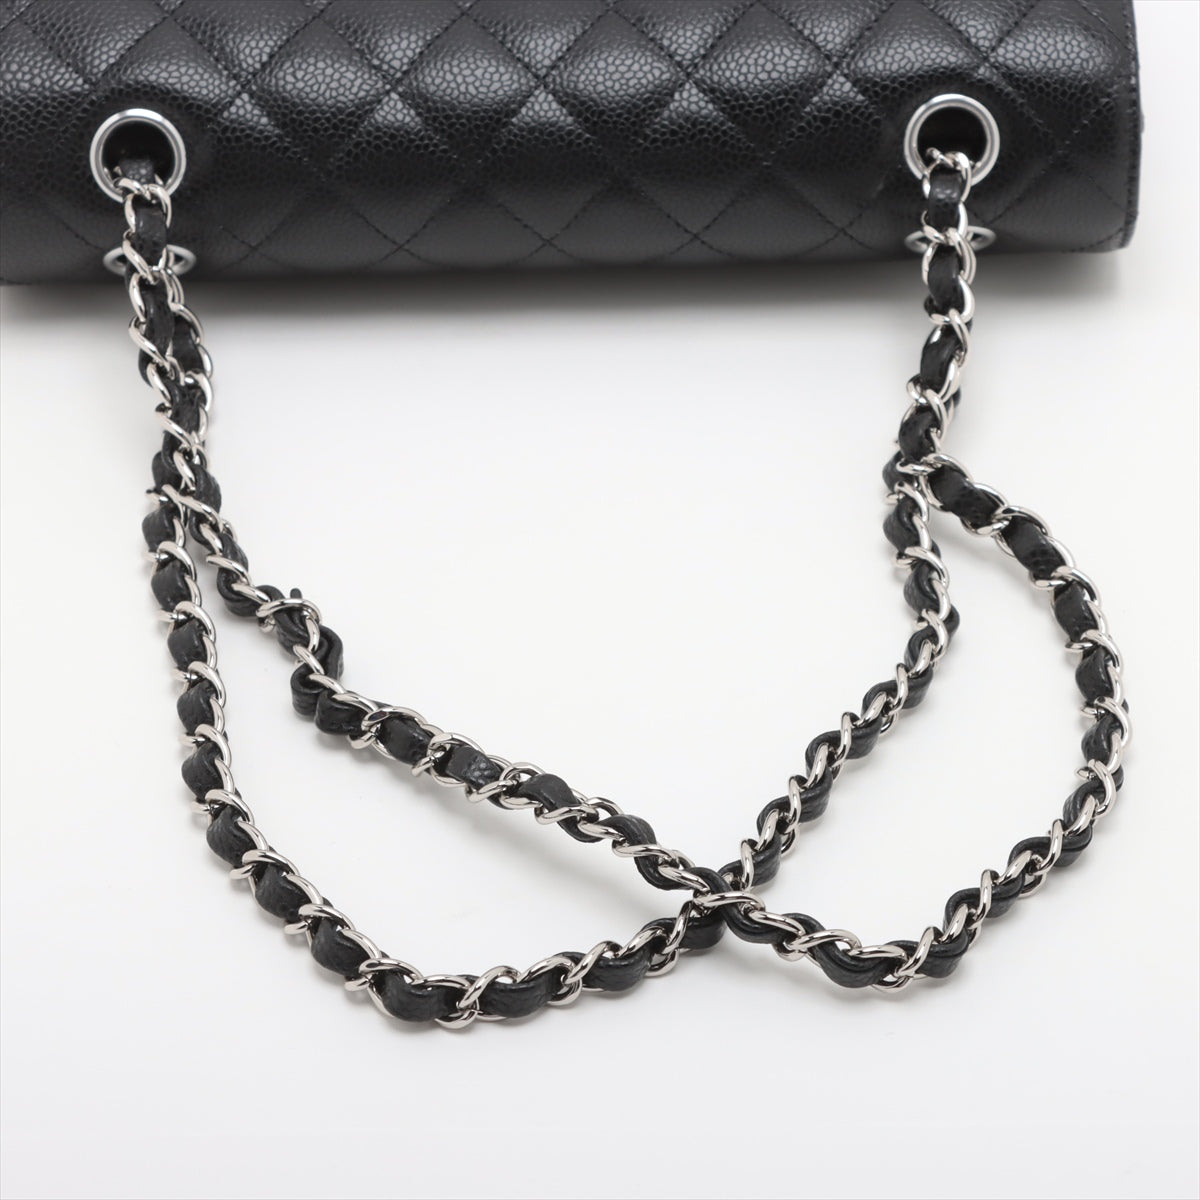 Chanel Matelasse 25 Caviar Skin Double Flap Double Chain Bag Black Silver Metal Fittings 22XXXXXX